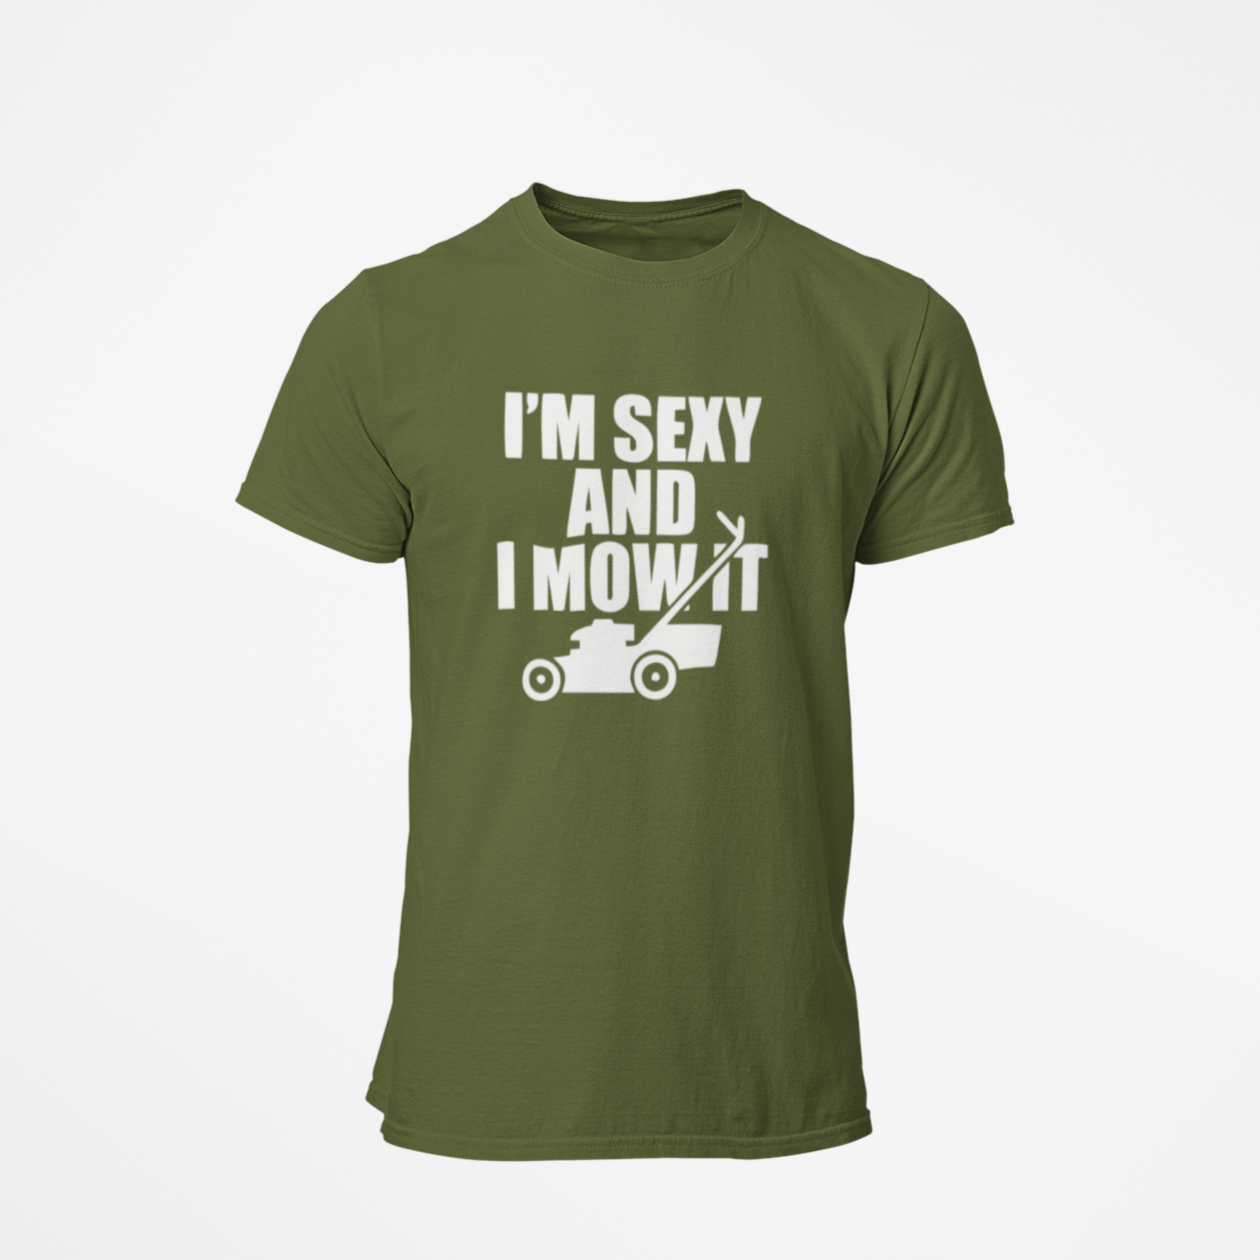 Im sexy and I mow it teeshirt - Khaki